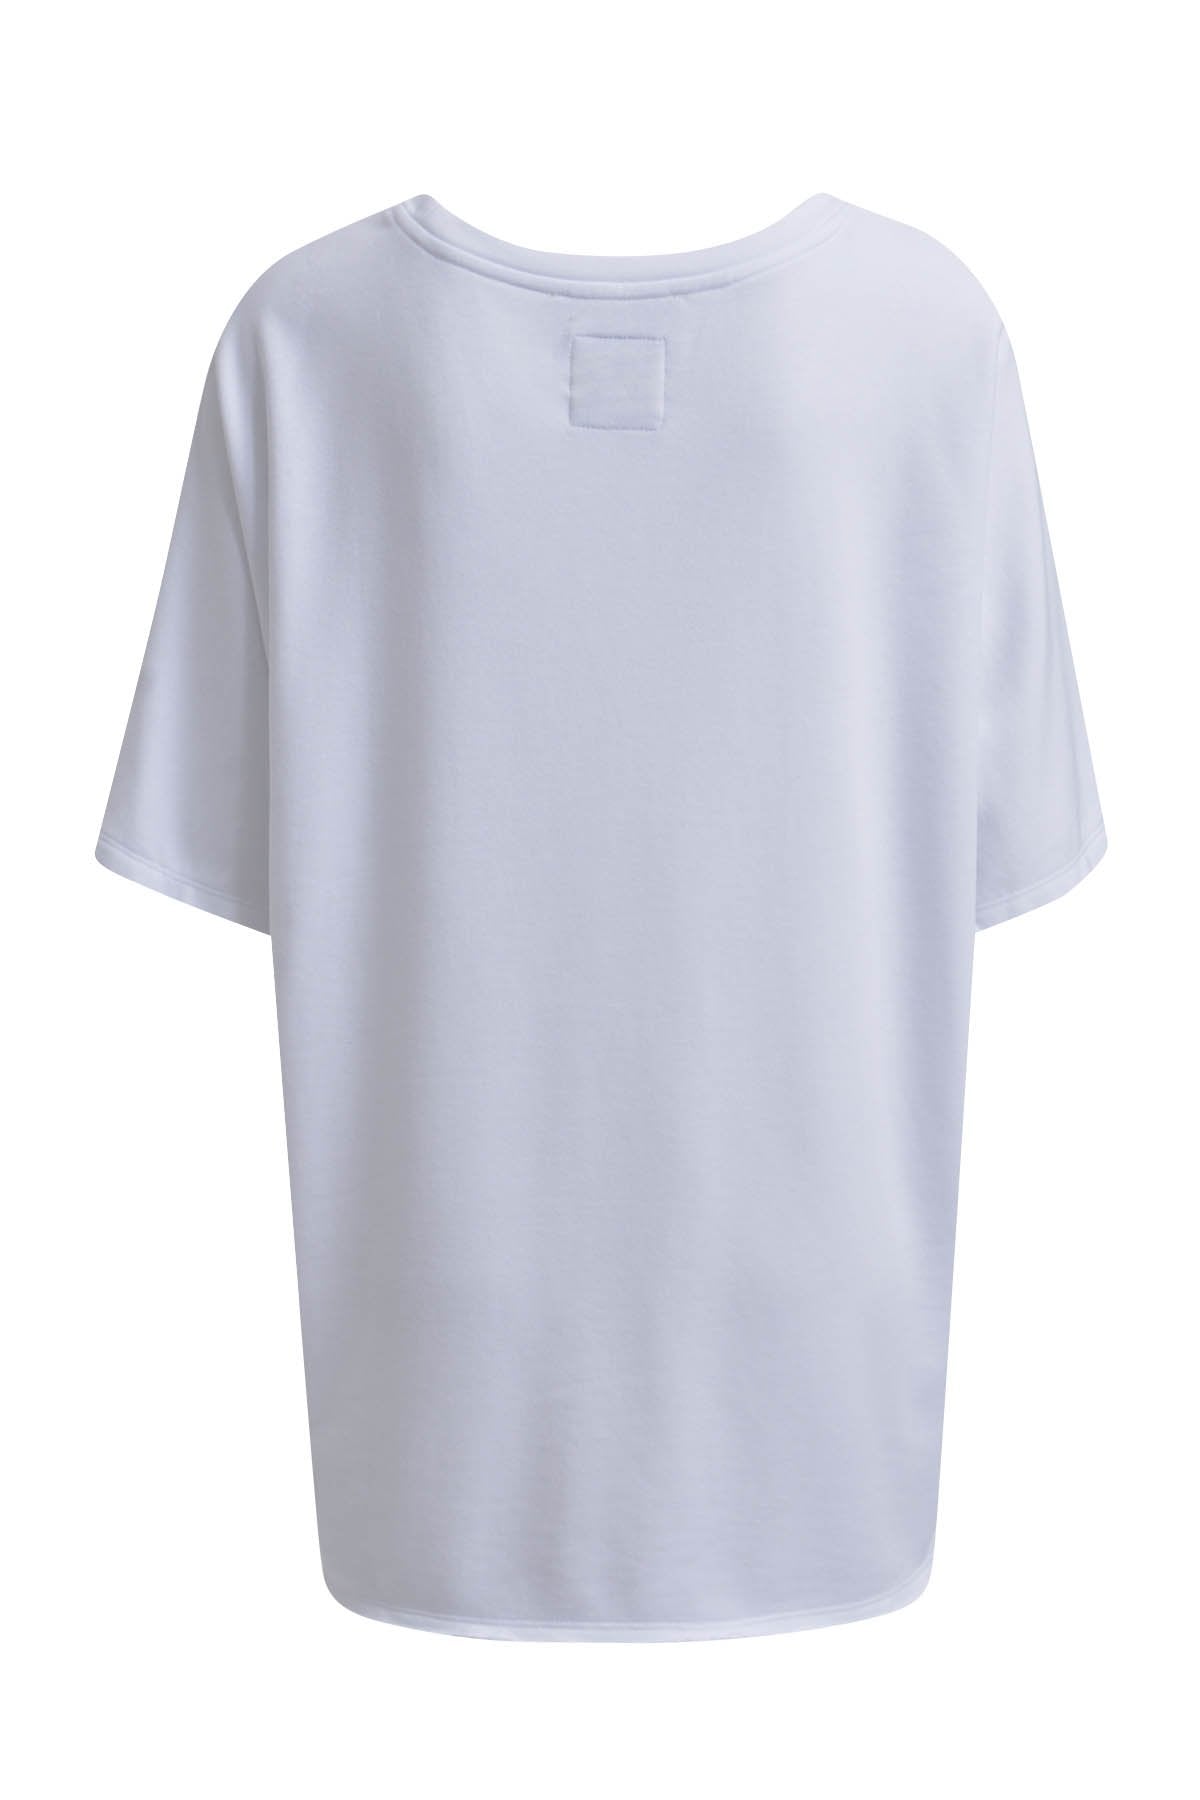 Oversize Sweatshirt Short Sleeves (White)